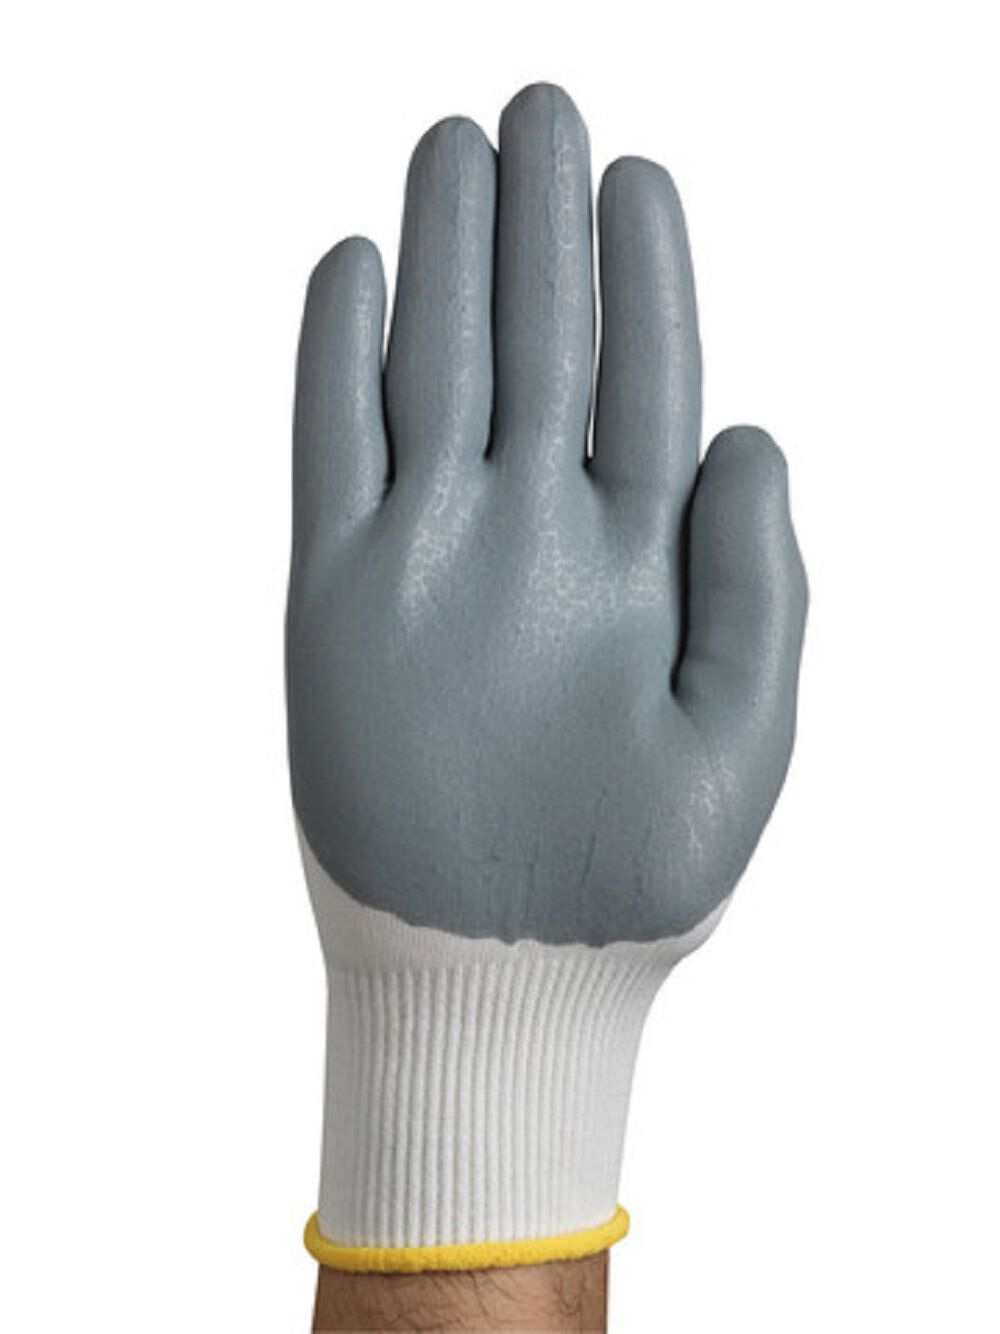 HyFlex Nitrile Glove - Size 9 11-800-9